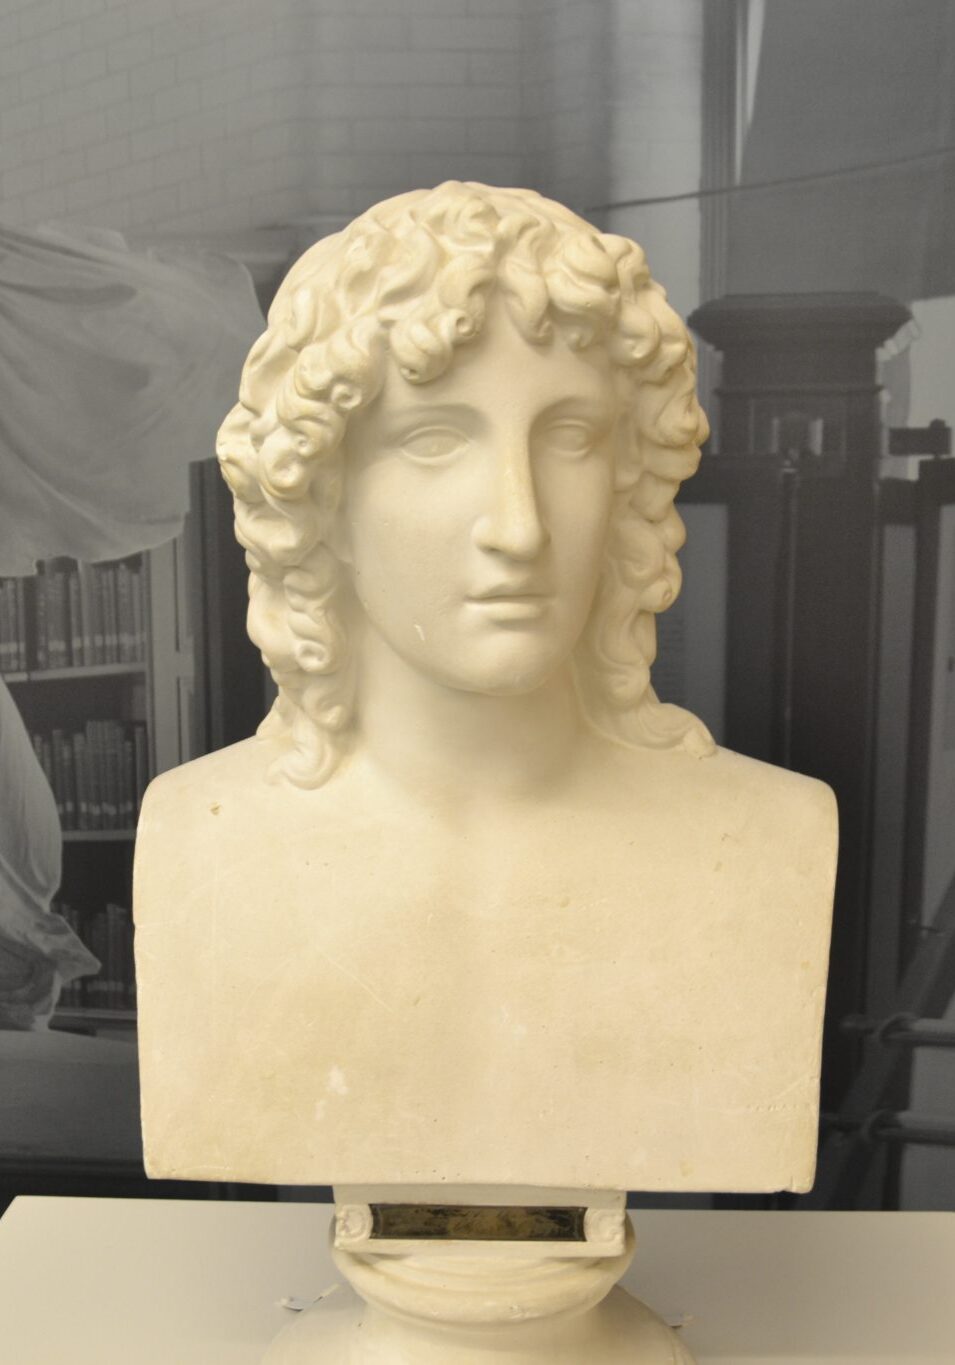 <p>Reproduction of Portrait Bust of Virgil.</p><p>1895. Plaster.</p><p>Department of the Classics, Colgate University.</p><p>Photo by Erica Hiddink '17.</p>